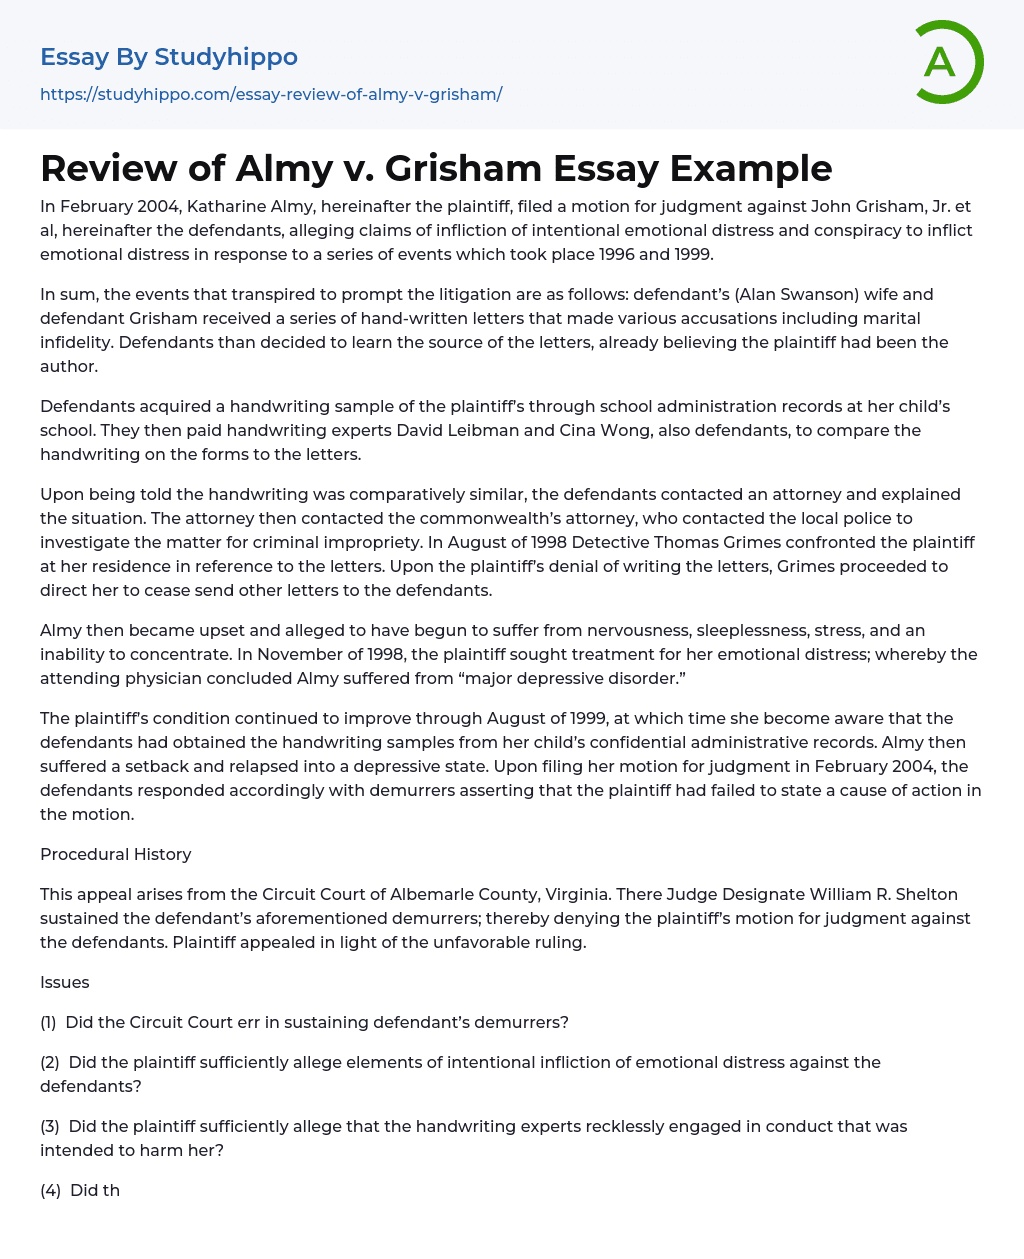 Review of Almy v. Grisham Essay Example